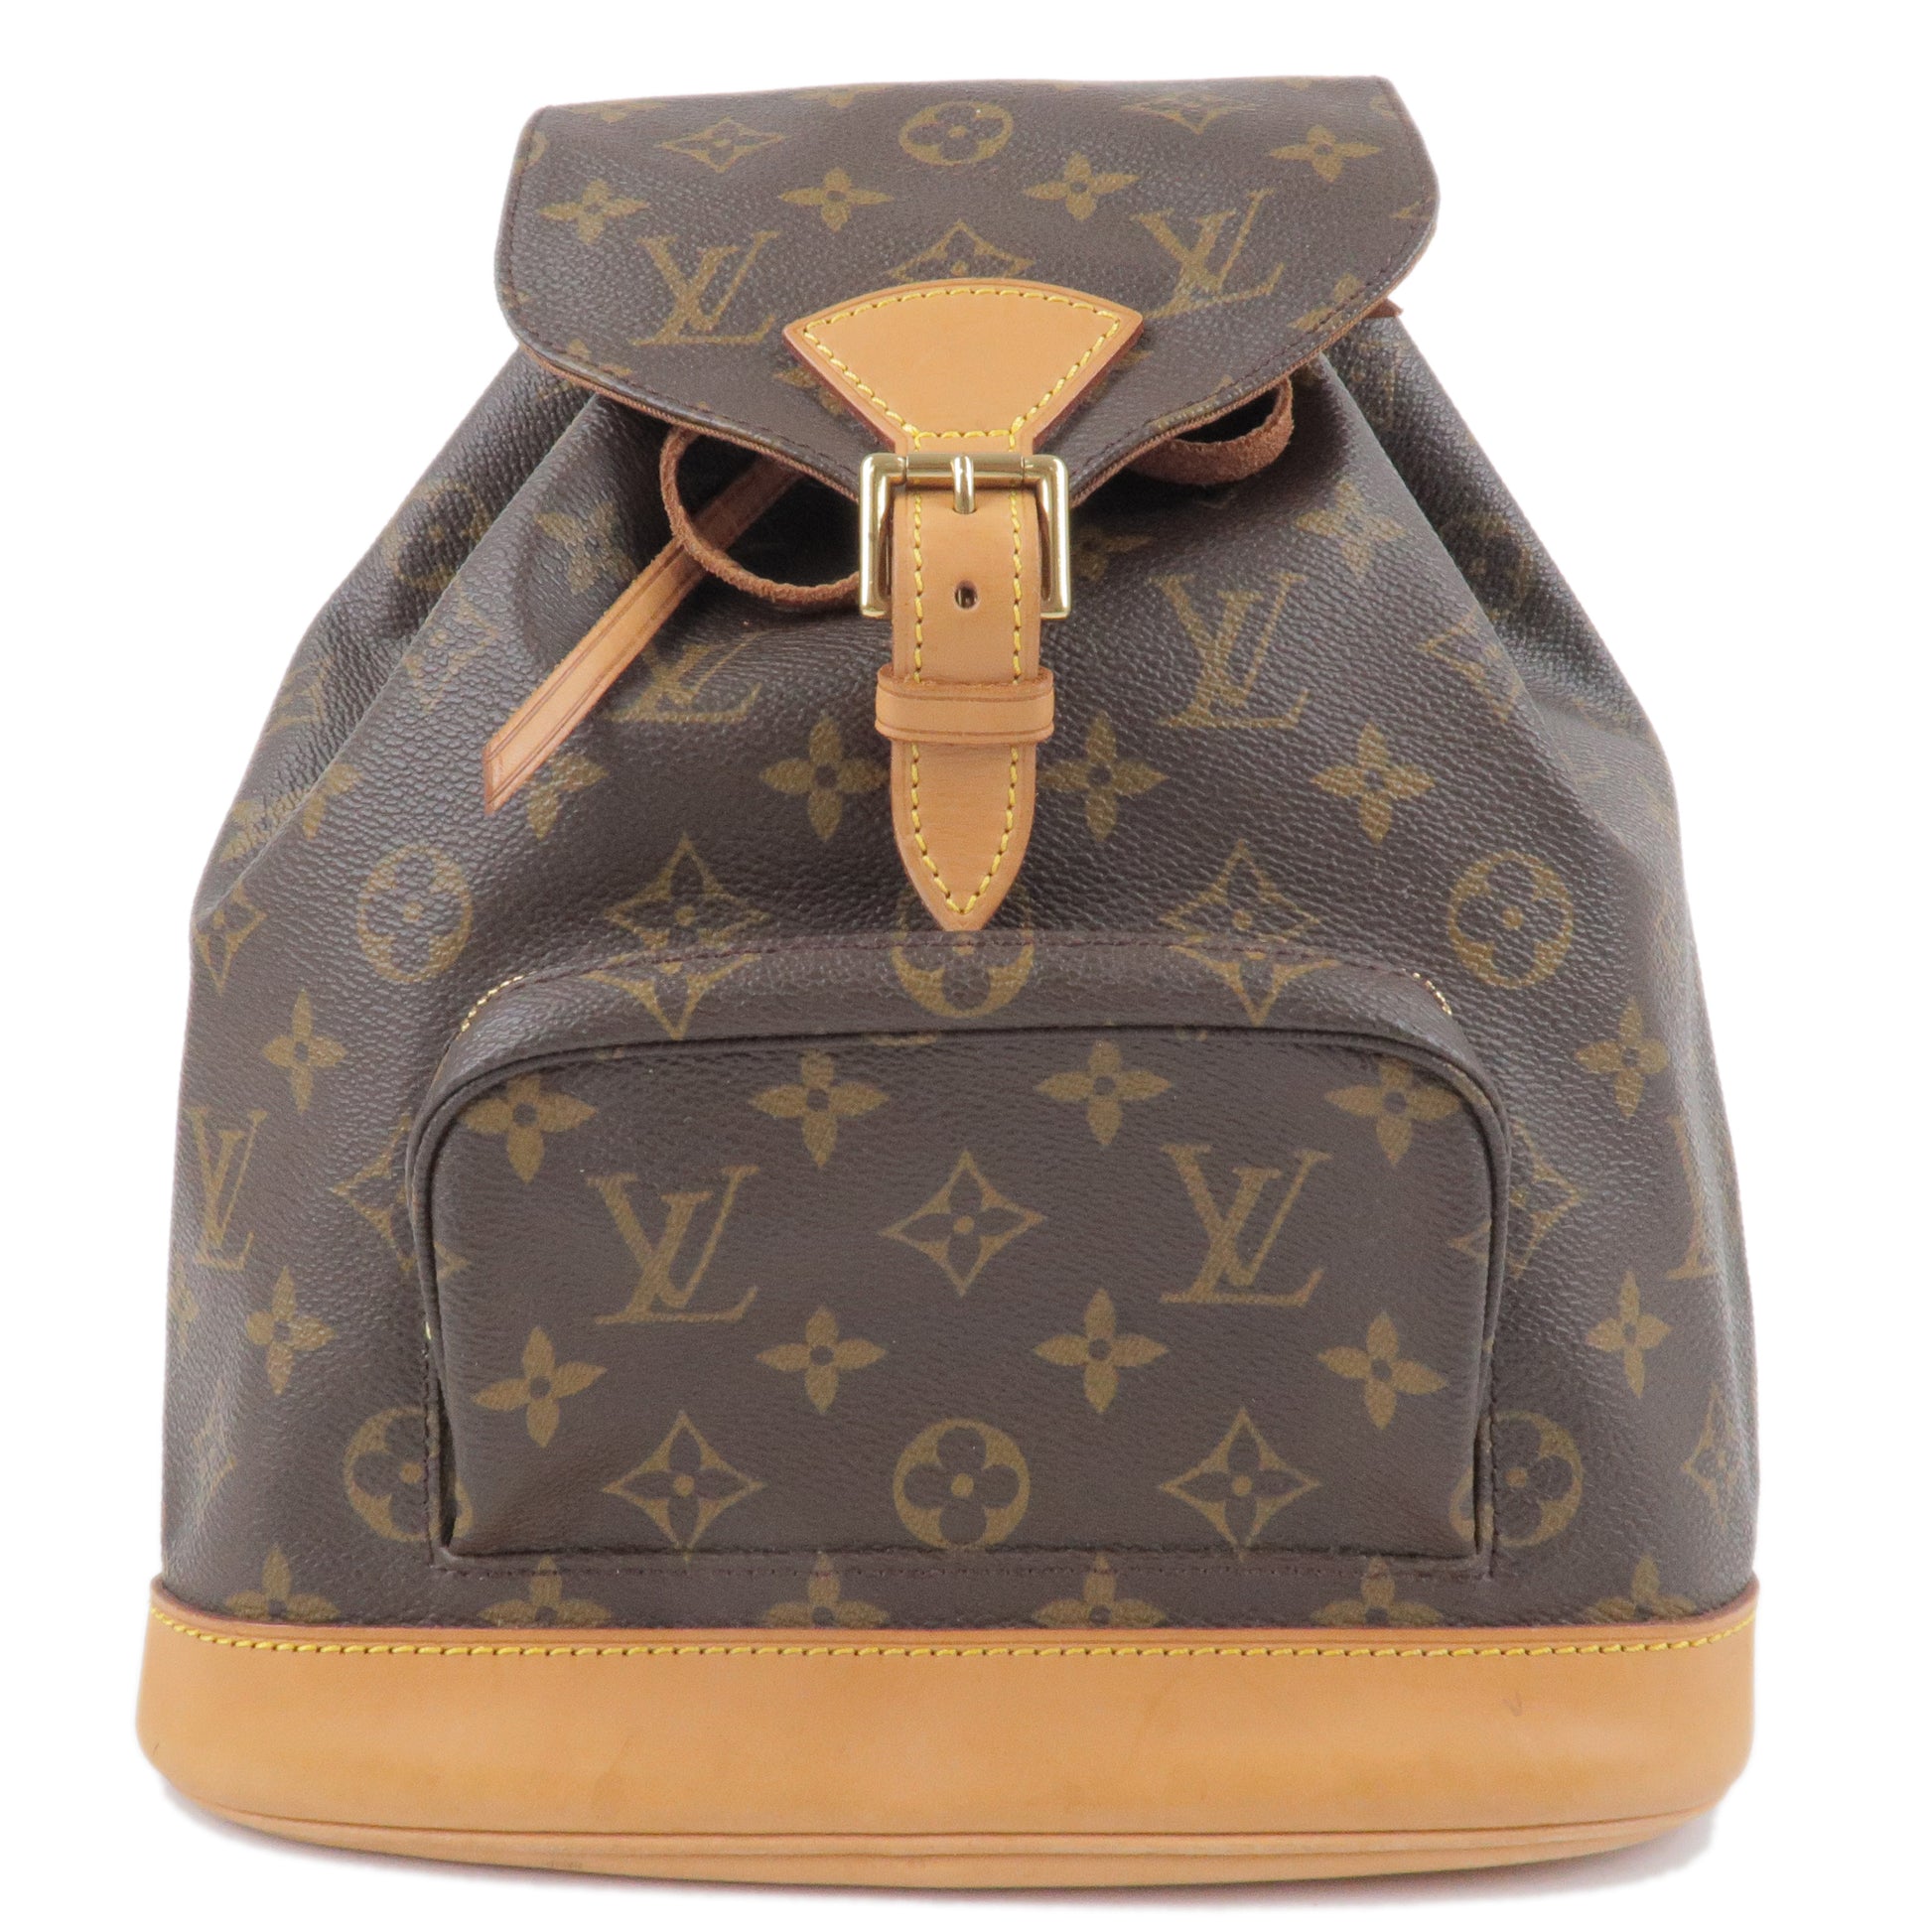 MM - Louis - Bag - Pack - M51136 – dct - Vuitton - Monogram